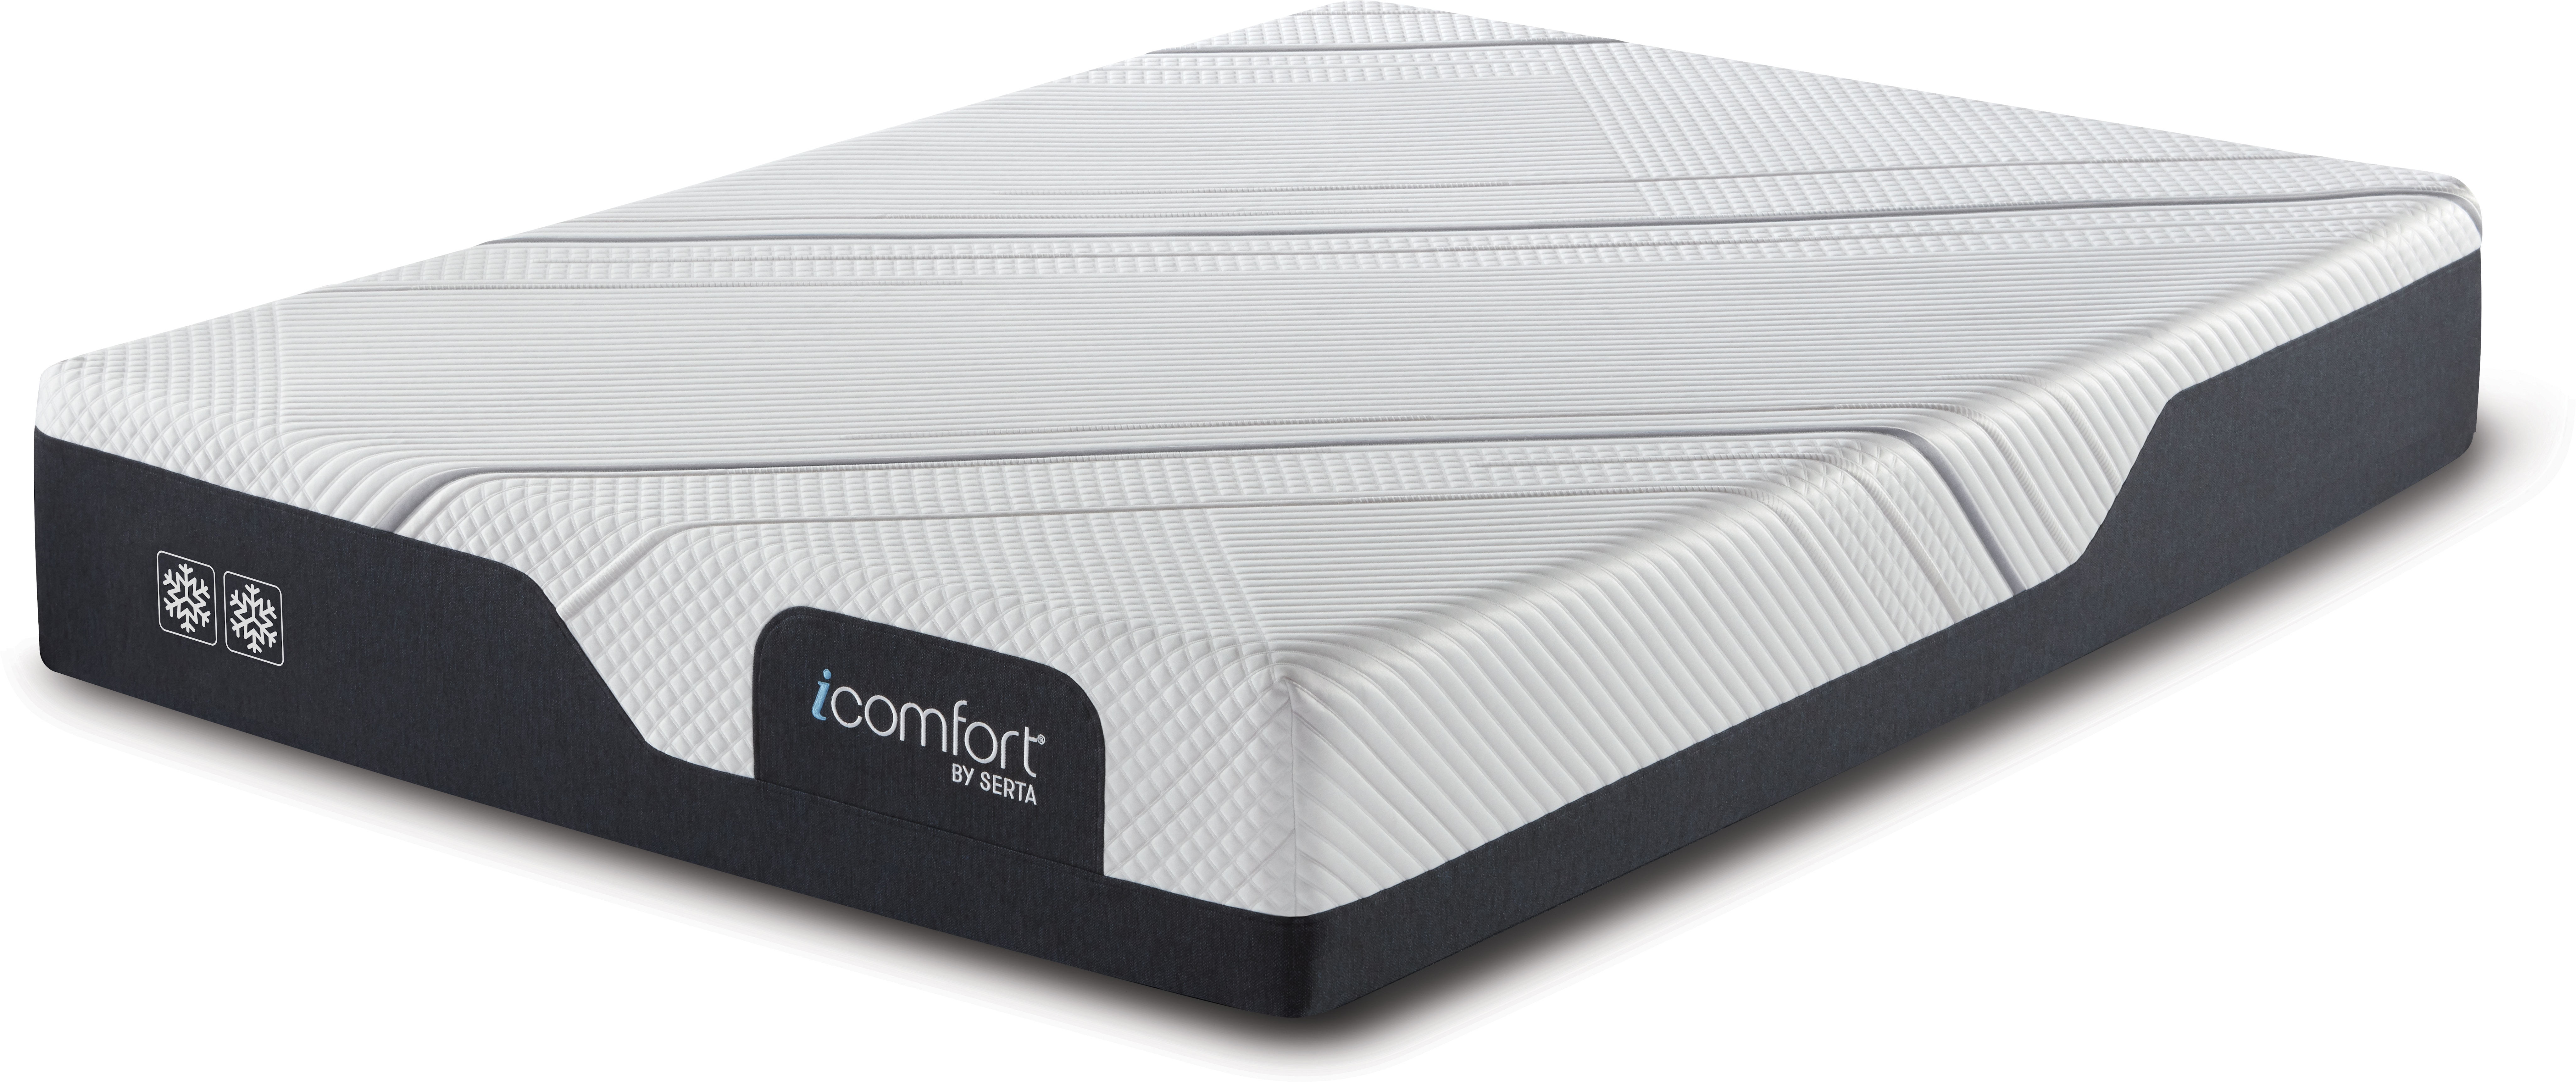 icomfort genius king firm mattress